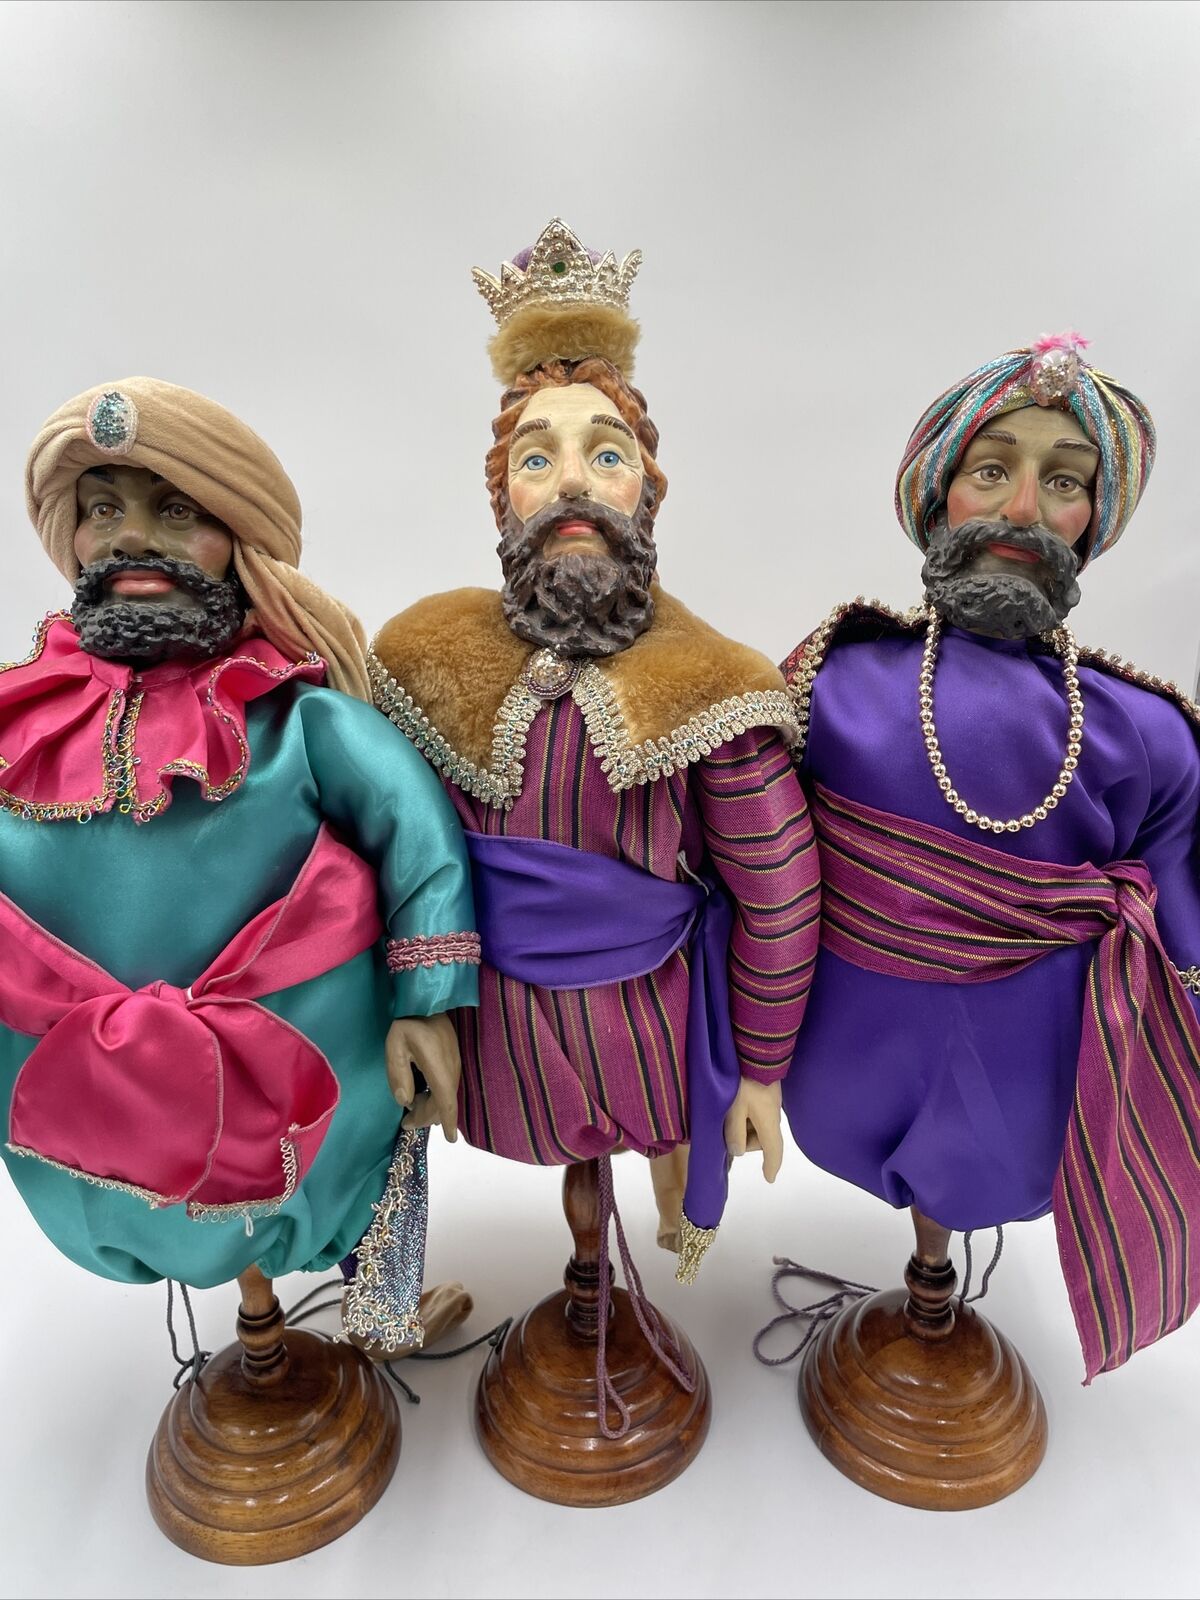 RARE Department 56 3 Wise Men 3 Kings Nativity Figures on Wooden Pedestal VTG